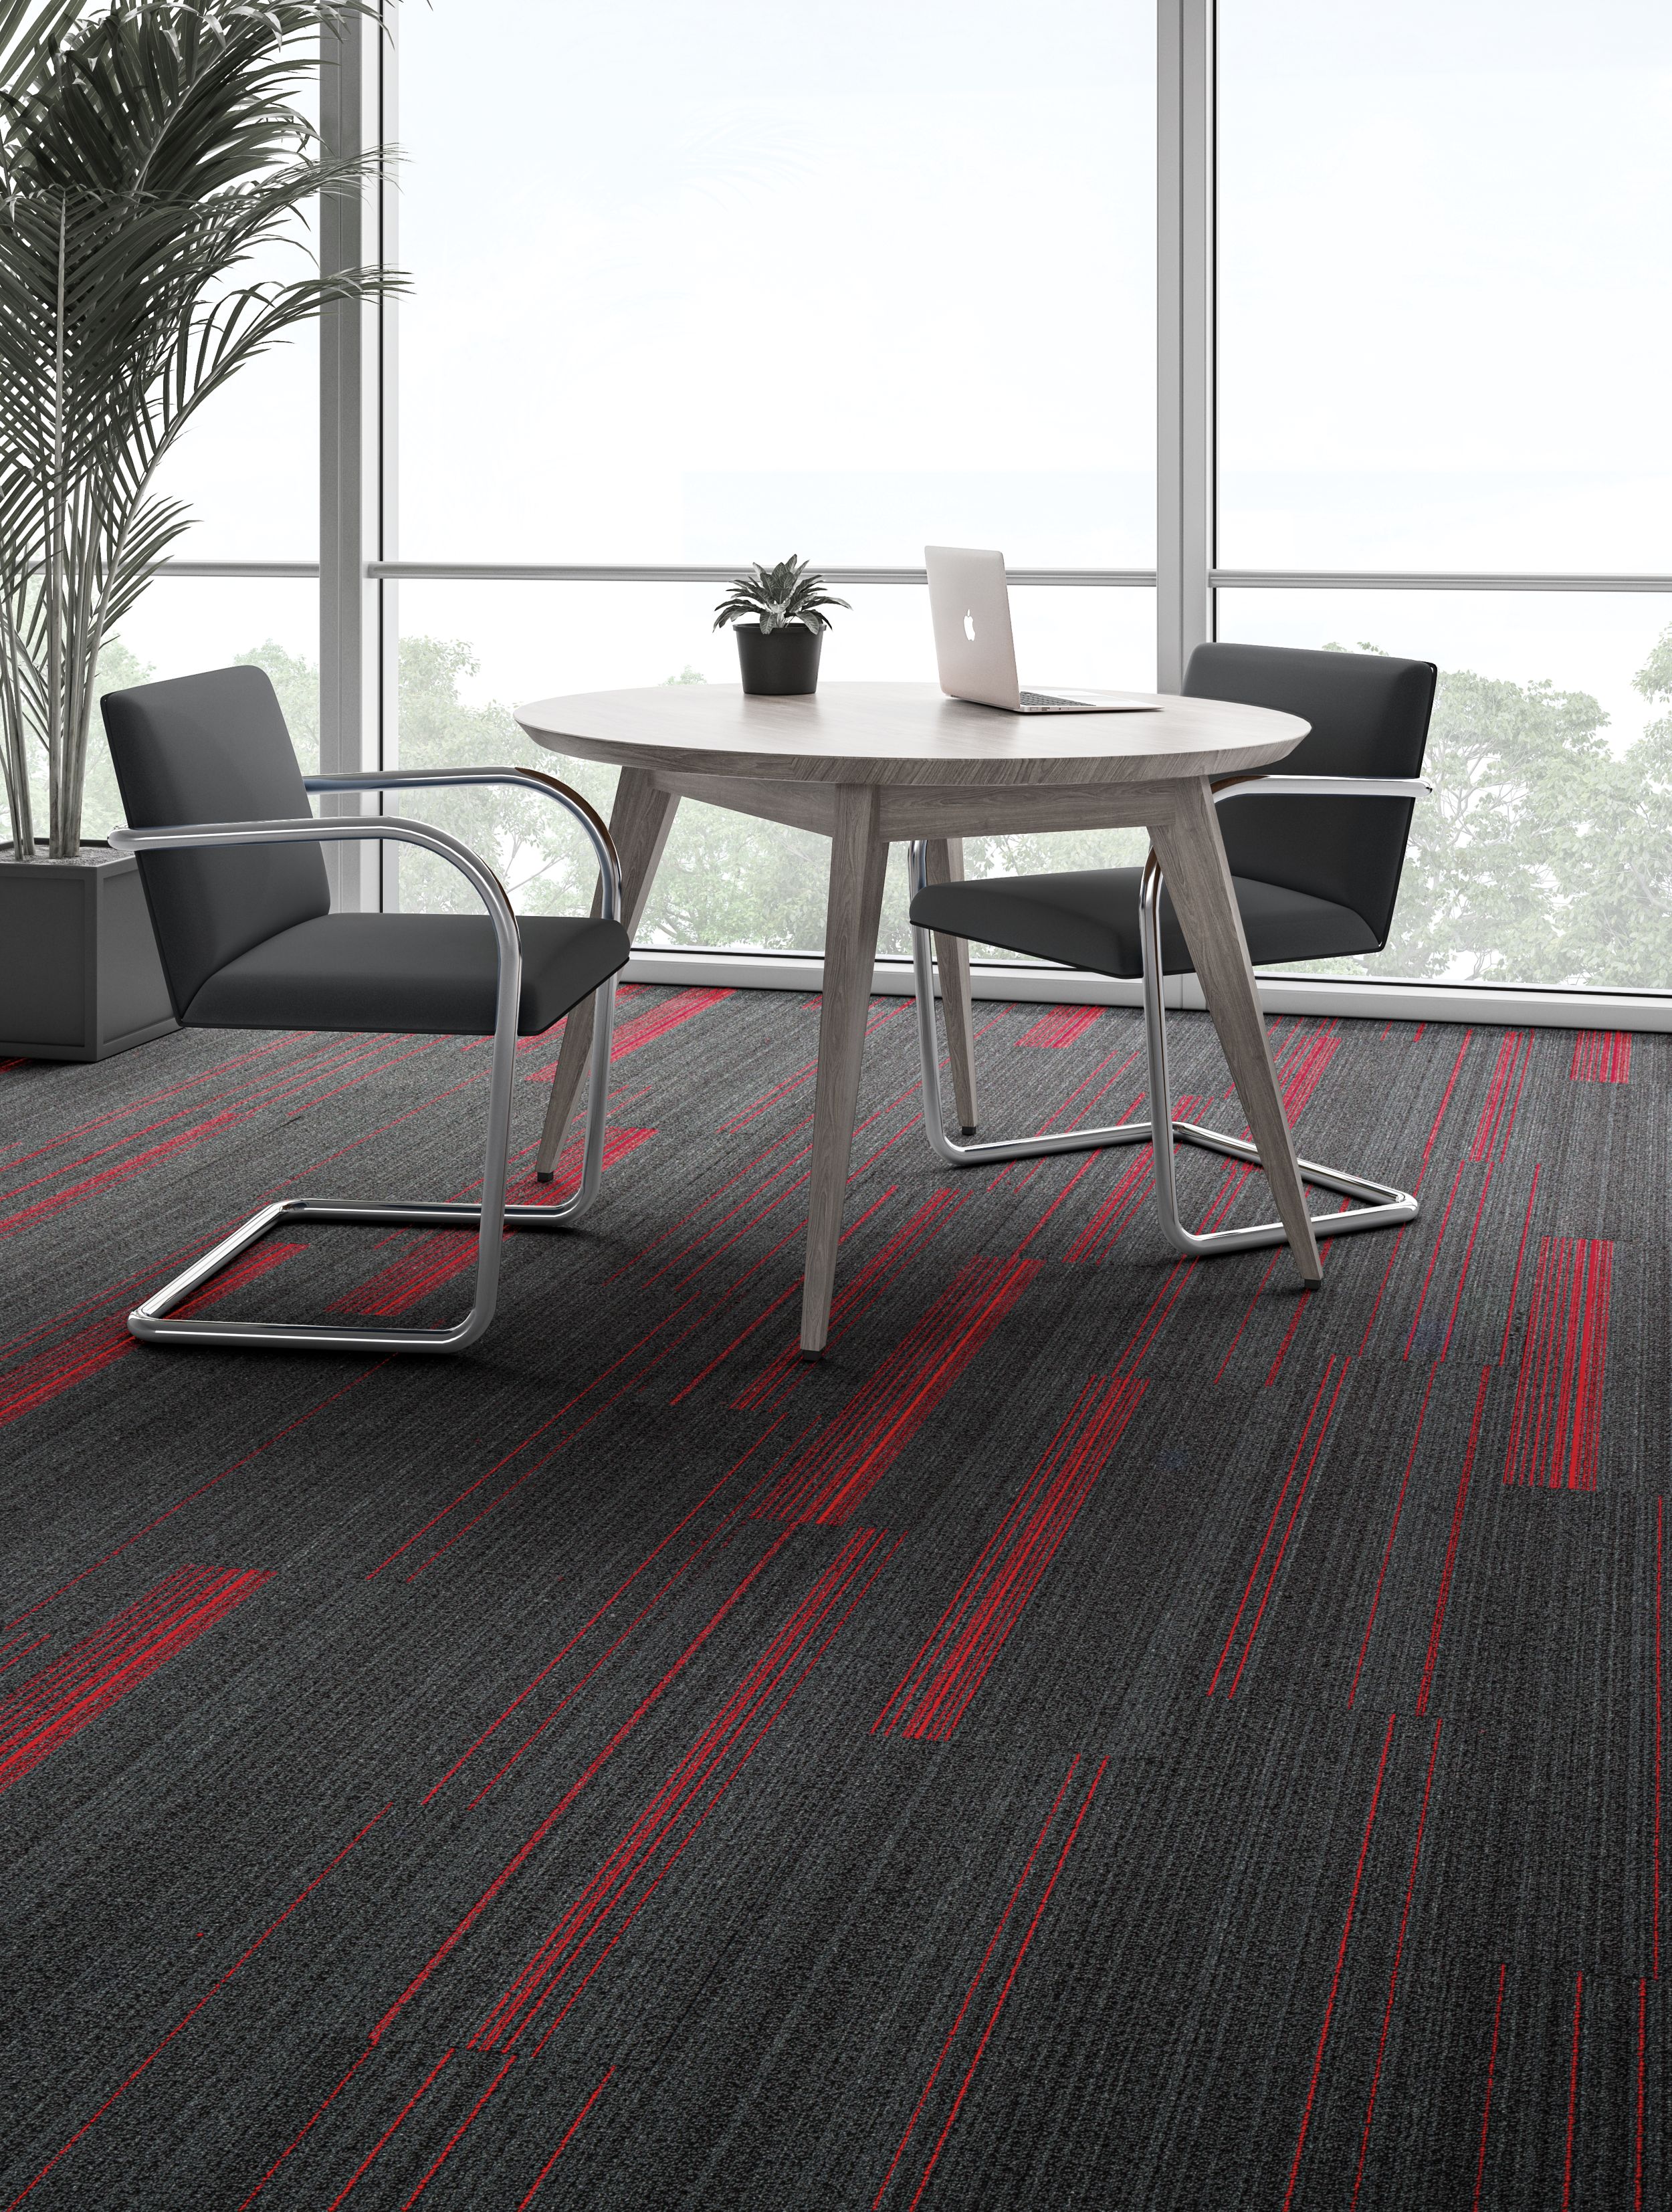 Interface BP410 plank carpet tile in meeting room imagen número 4